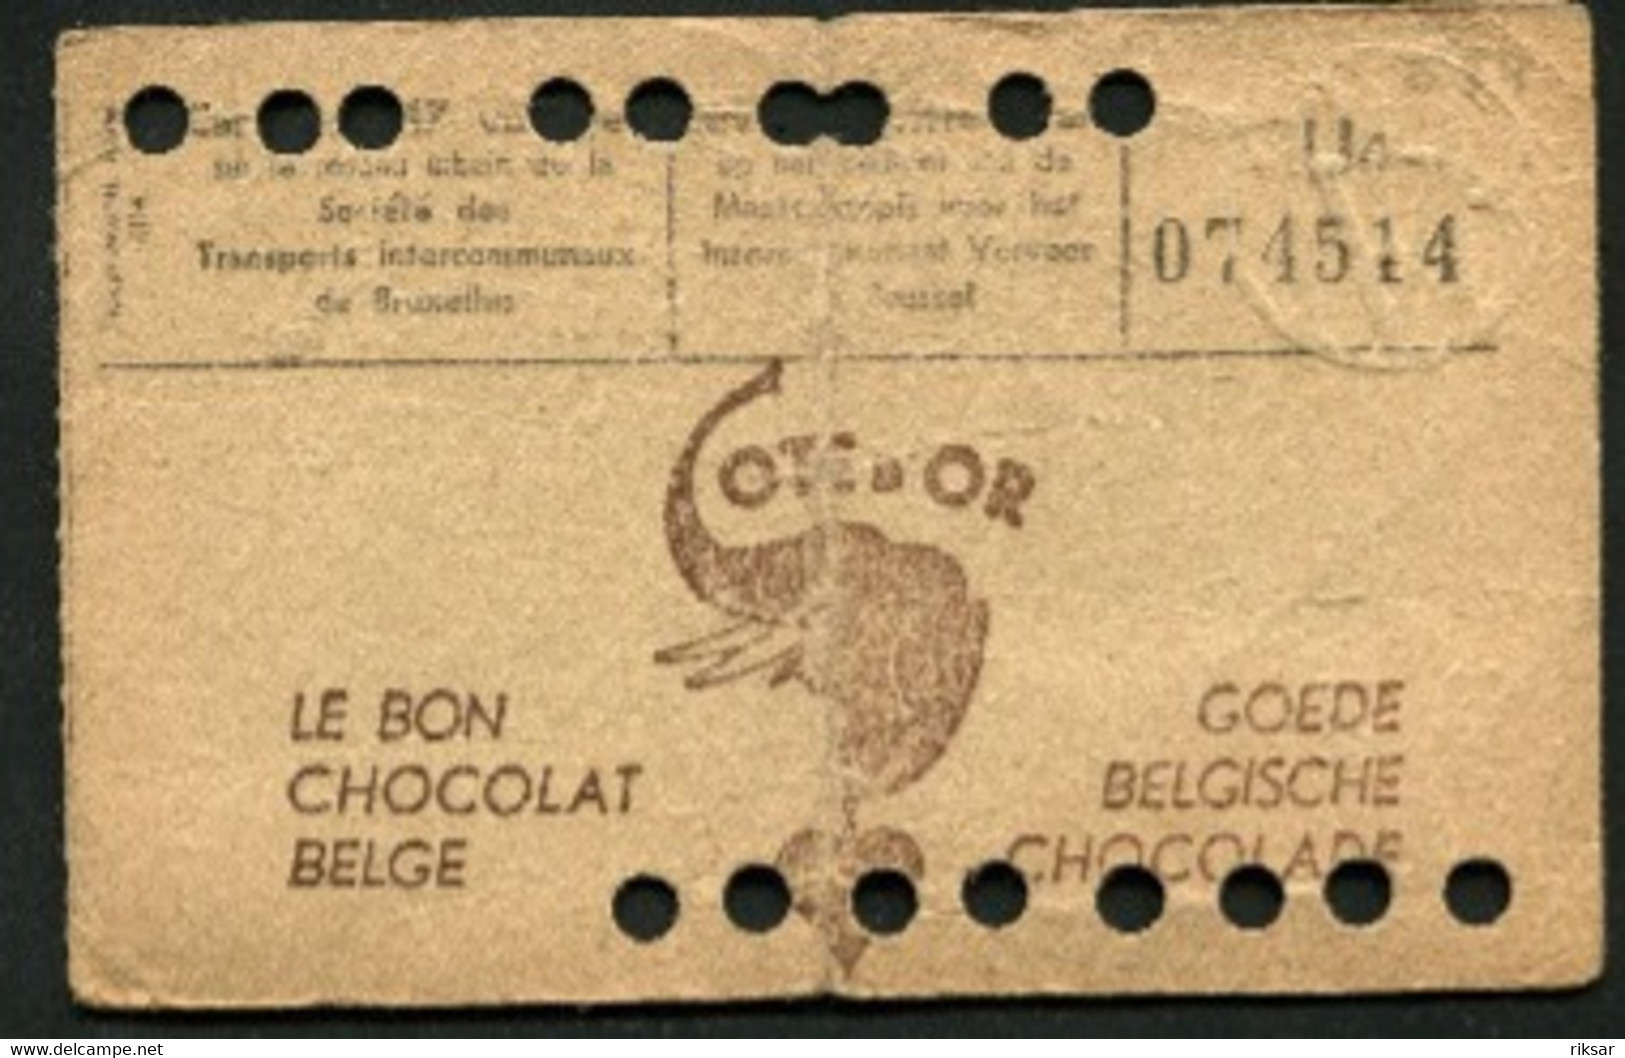 TICKET DE TRANSPORT(BRUXELLES) BELGIQUE(PUBLICITE CHOCOLAT) - Europe